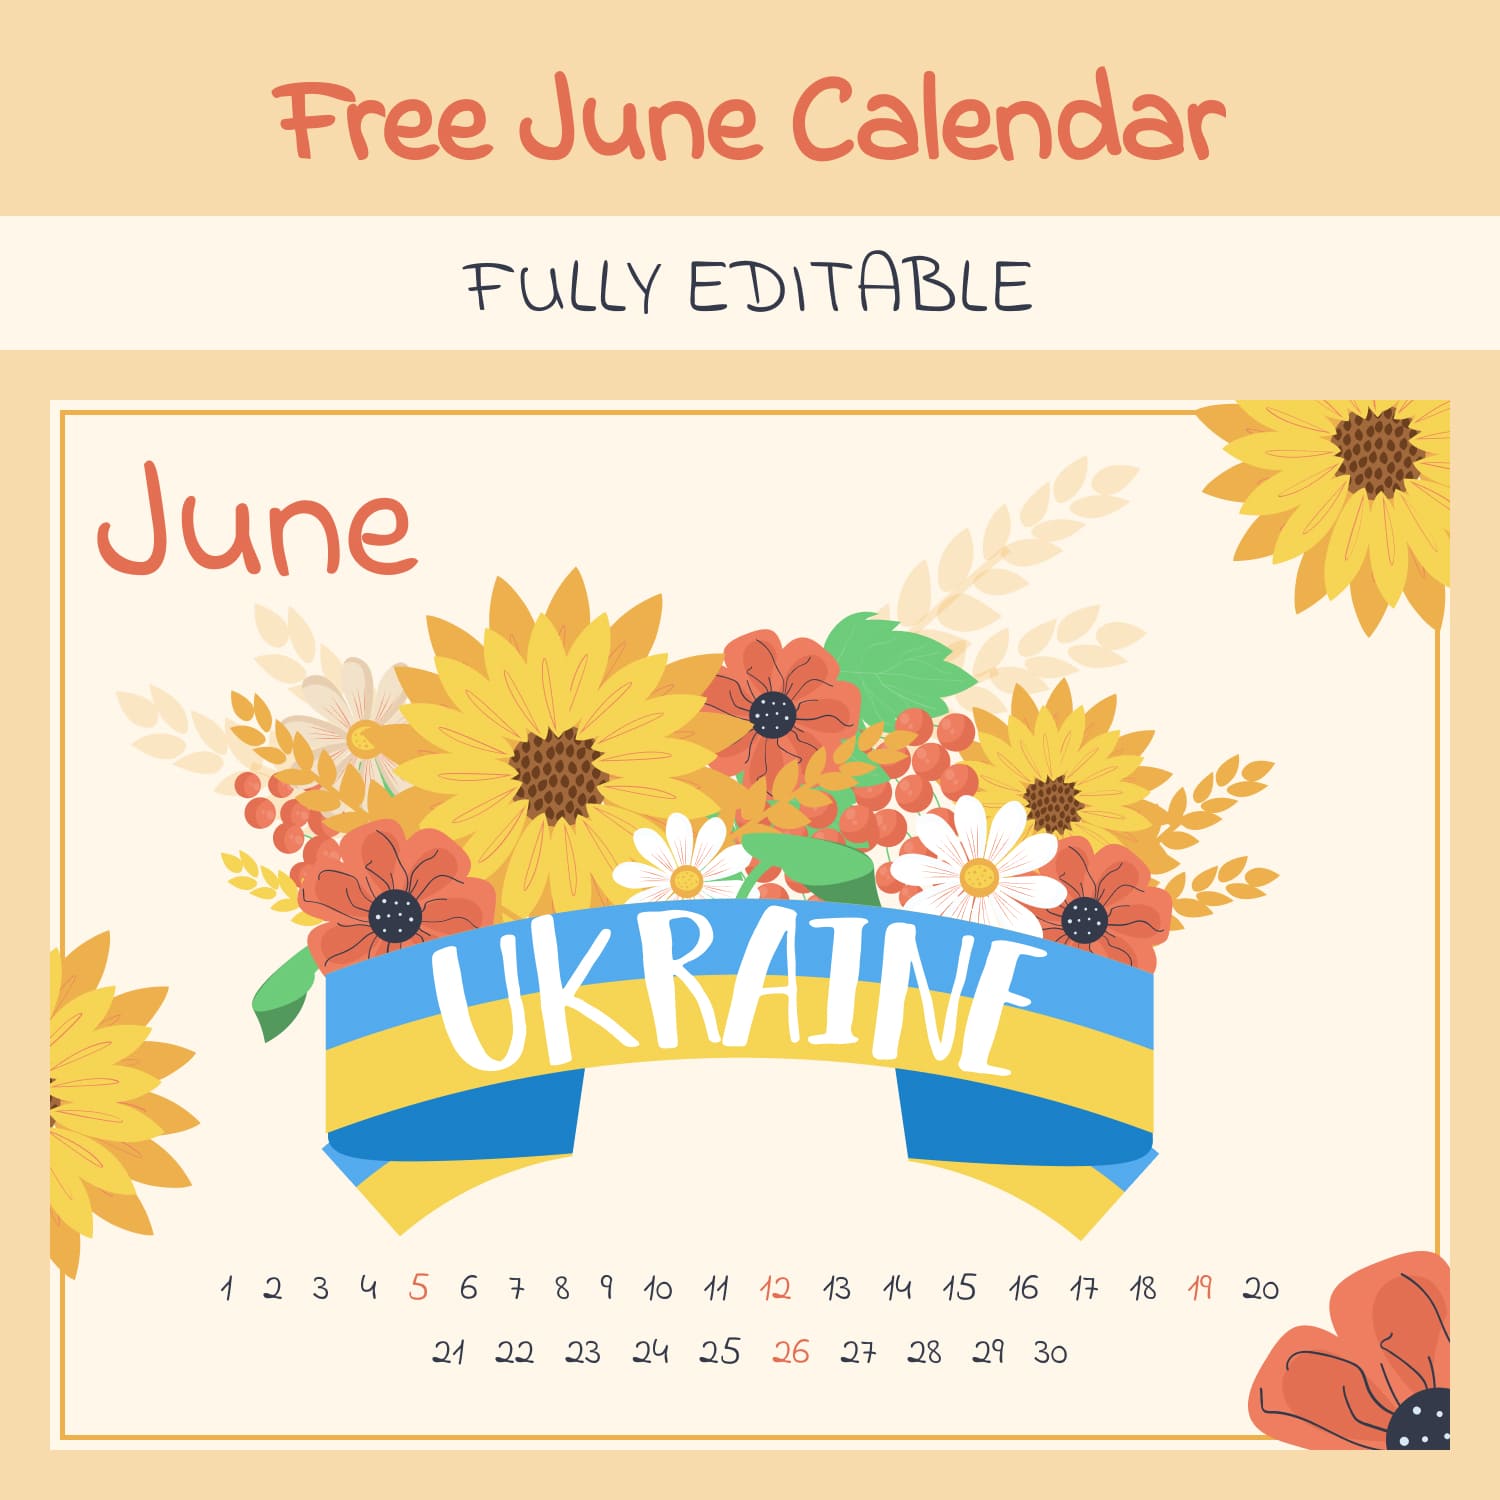 Ukraine Free June Calendar.